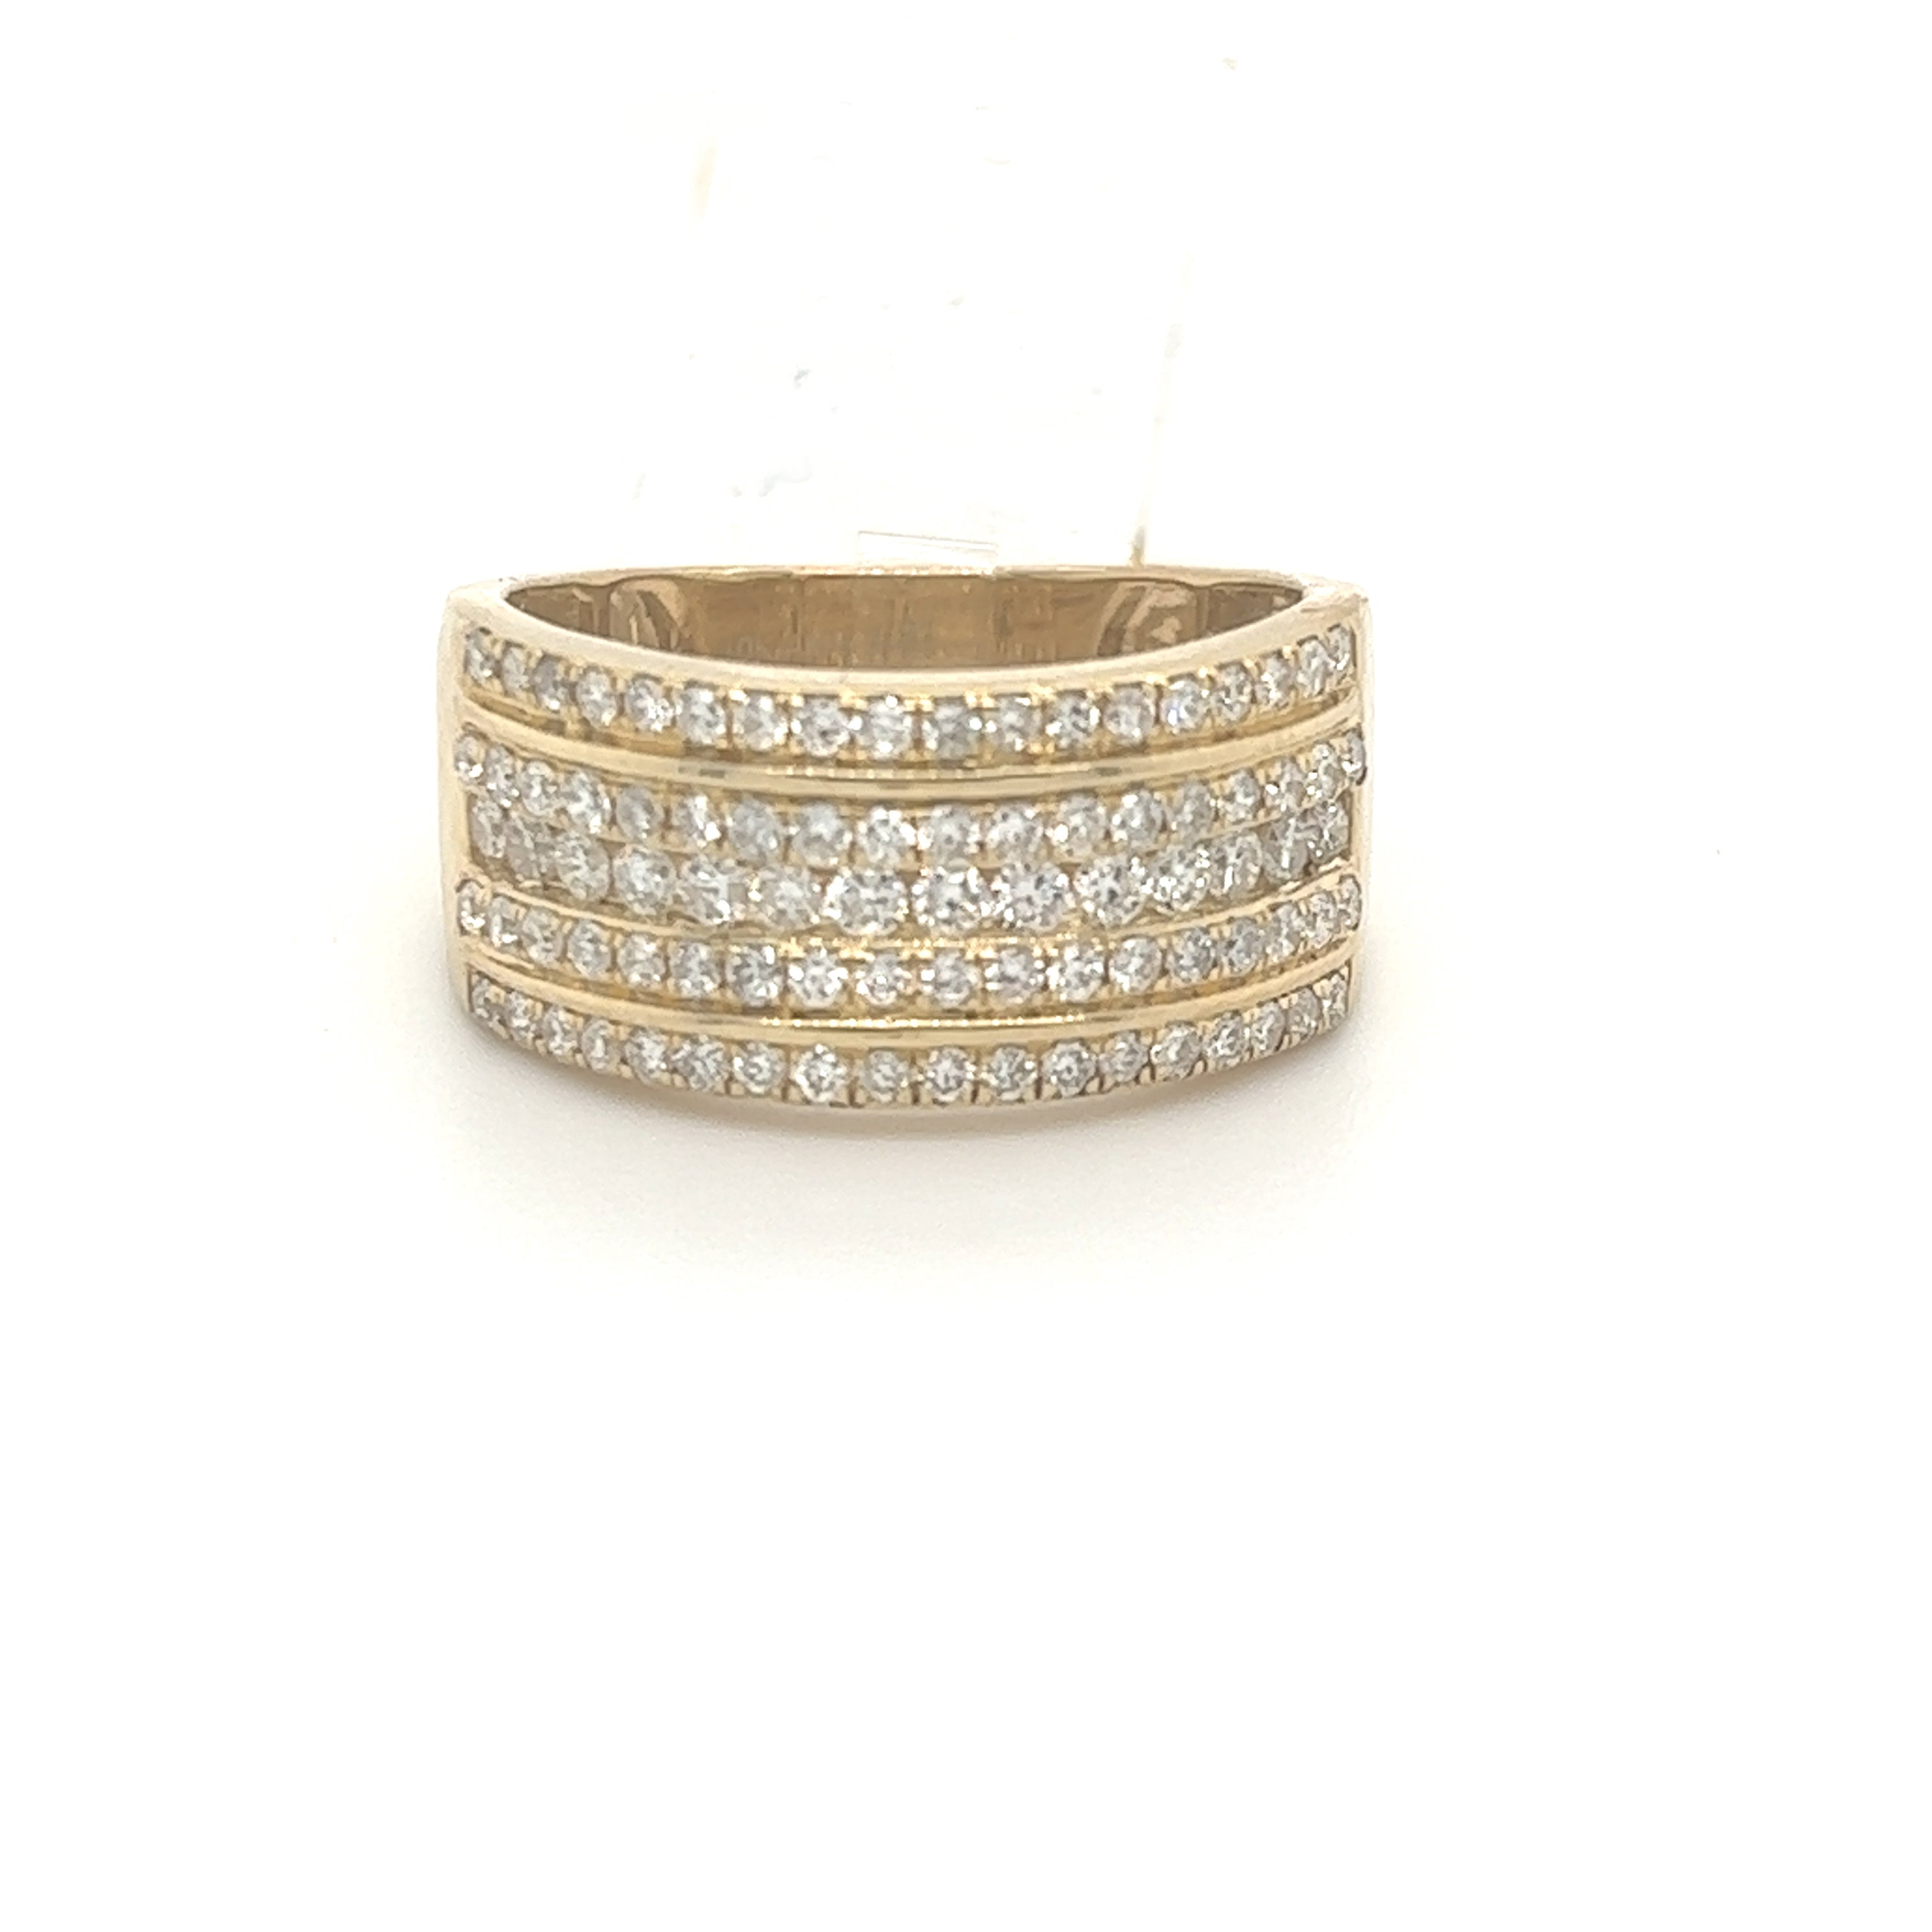 1.31CT. Diamond Ring in 10K Gold - White Carat - USA & Canada